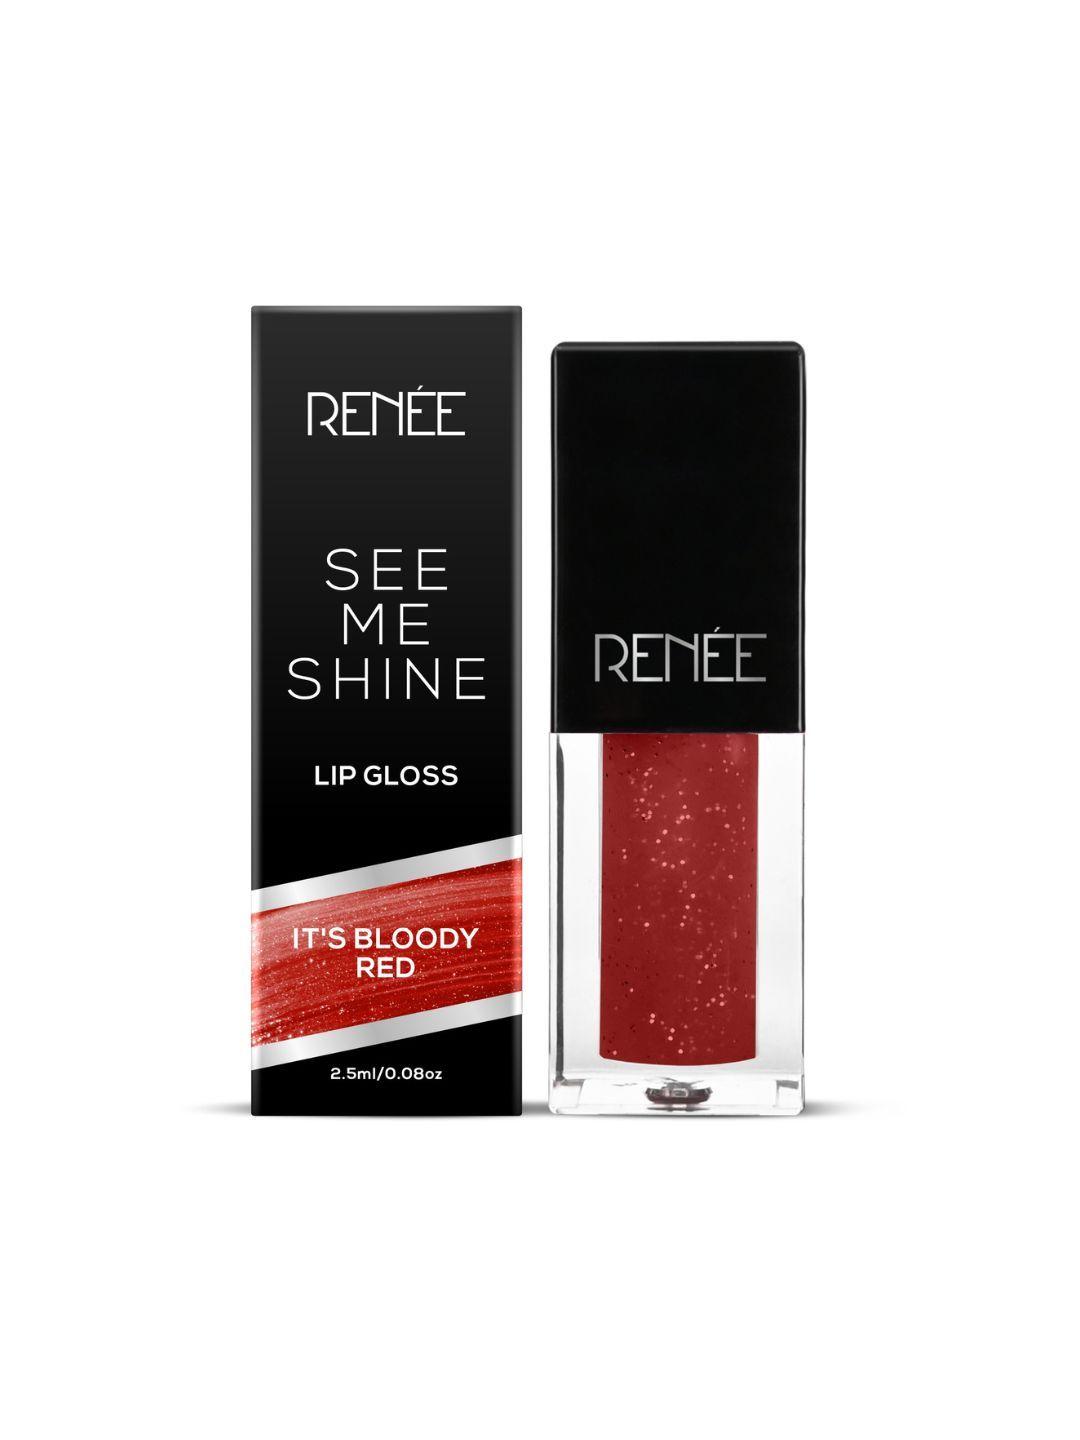 renee see me shine lip gloss - its bloody red 2.5ml